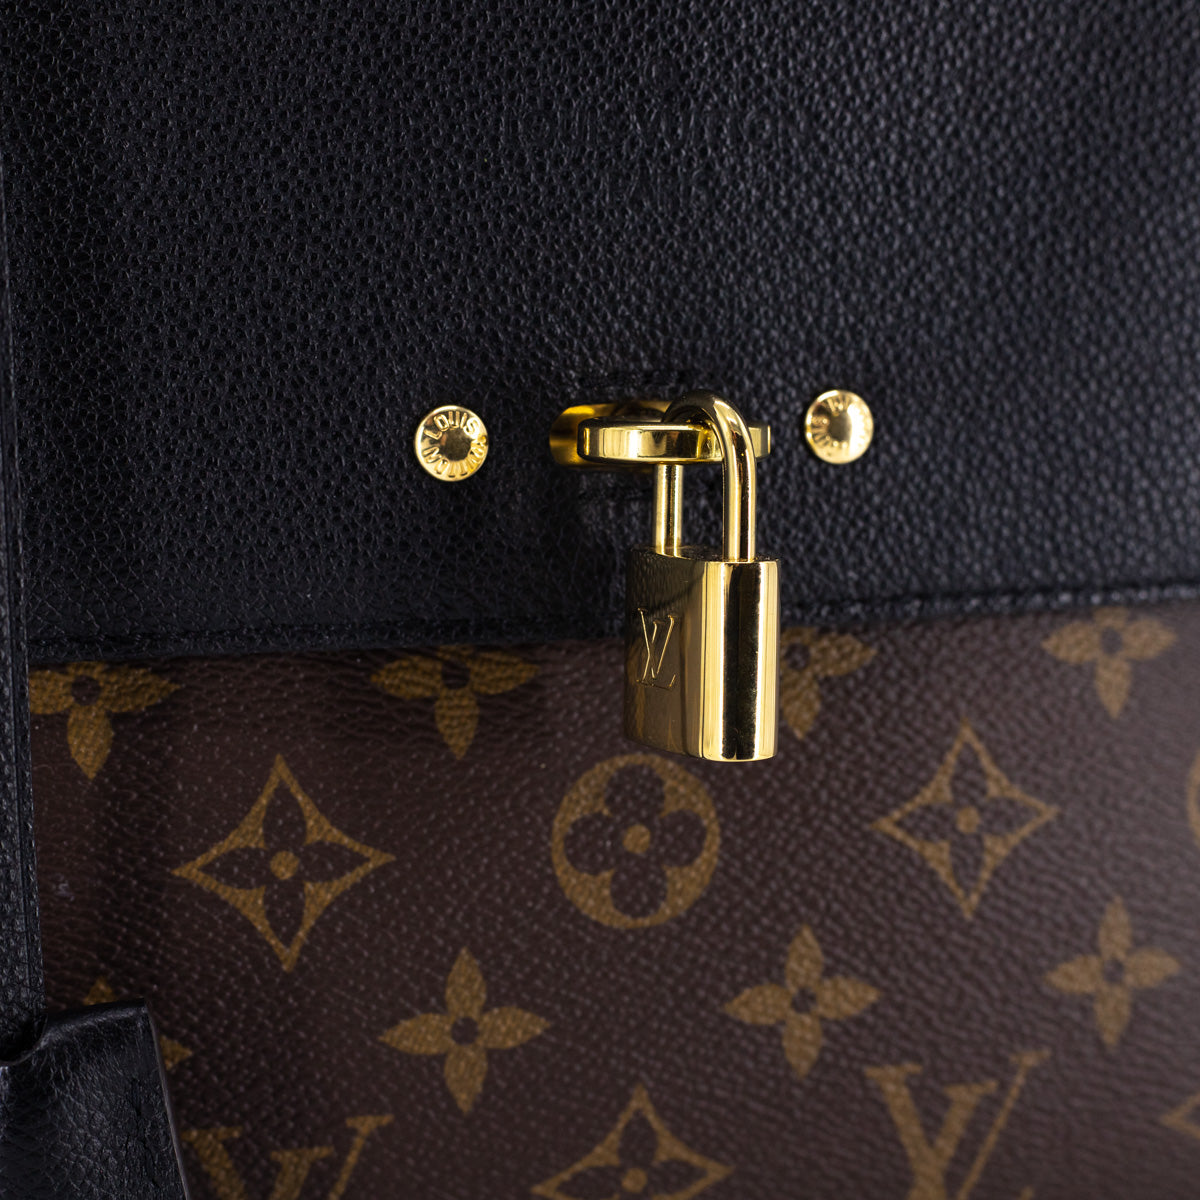 Louis Vuitton Venus Handbag Monogram Canvas and Leather Brown 17644544